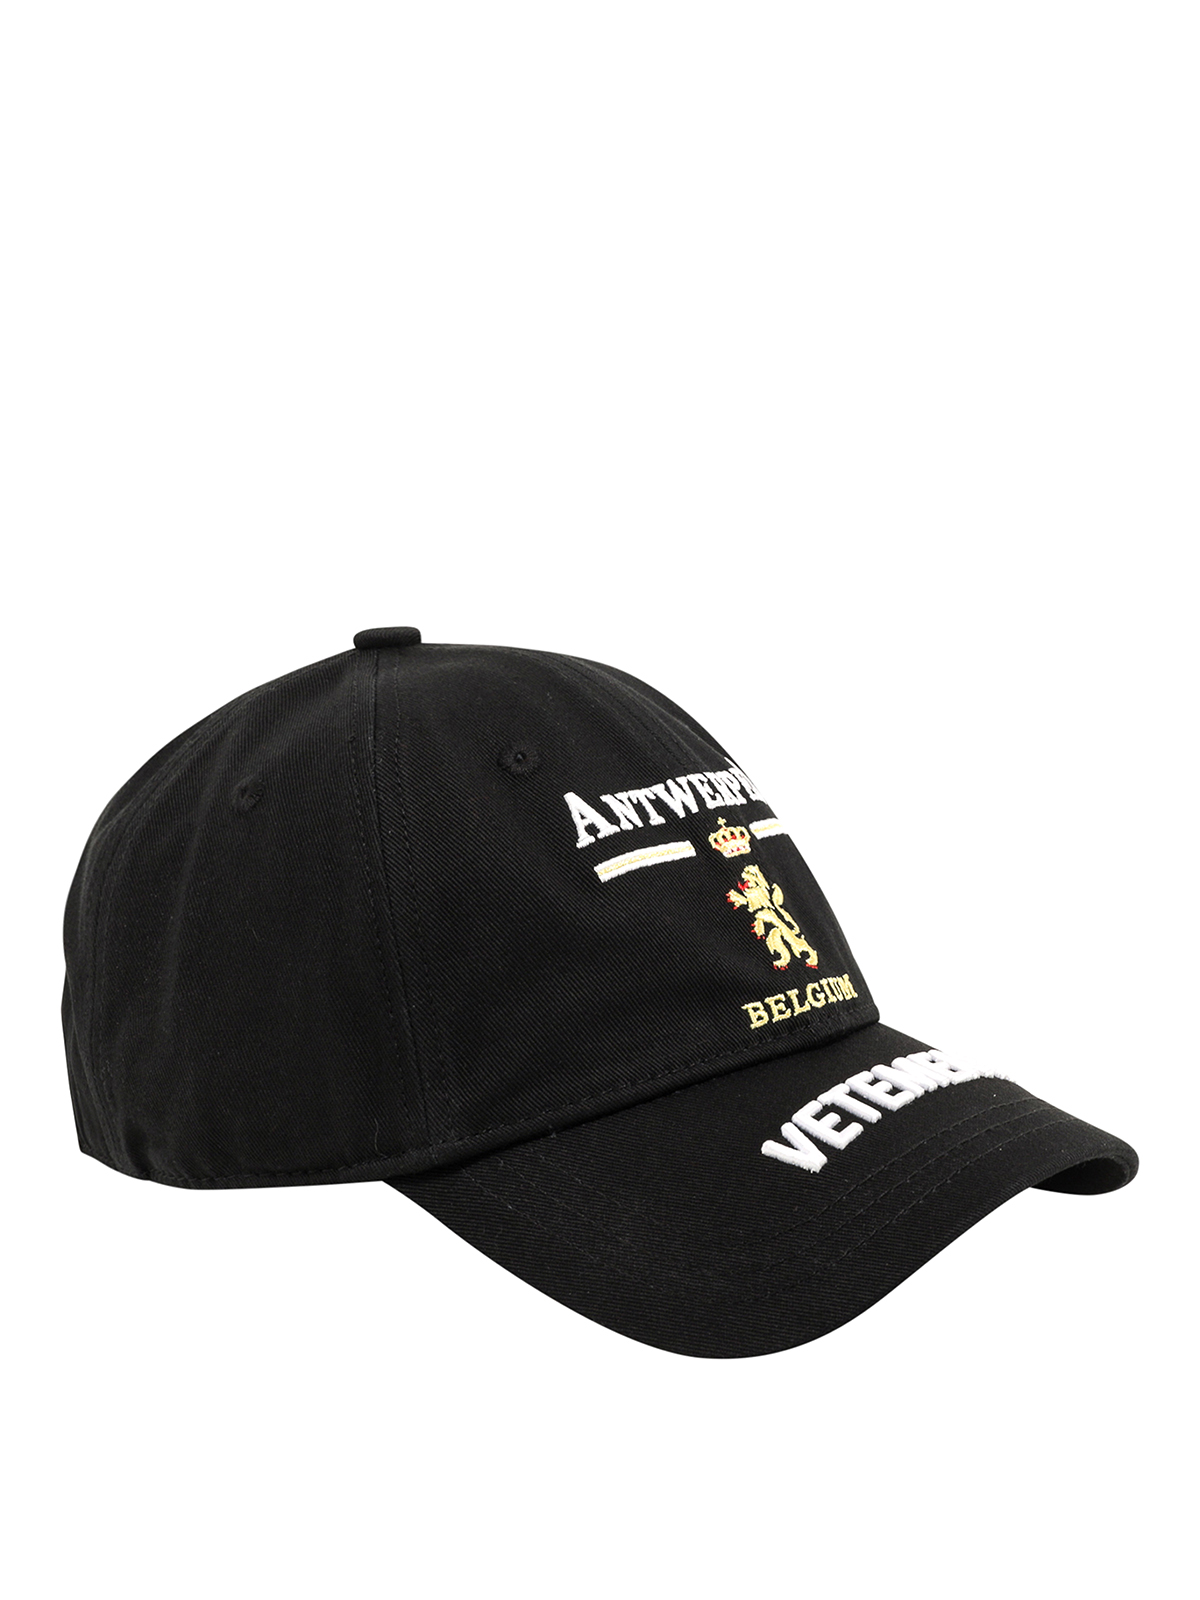 Vetements Antwerp Baseball Hat In Black